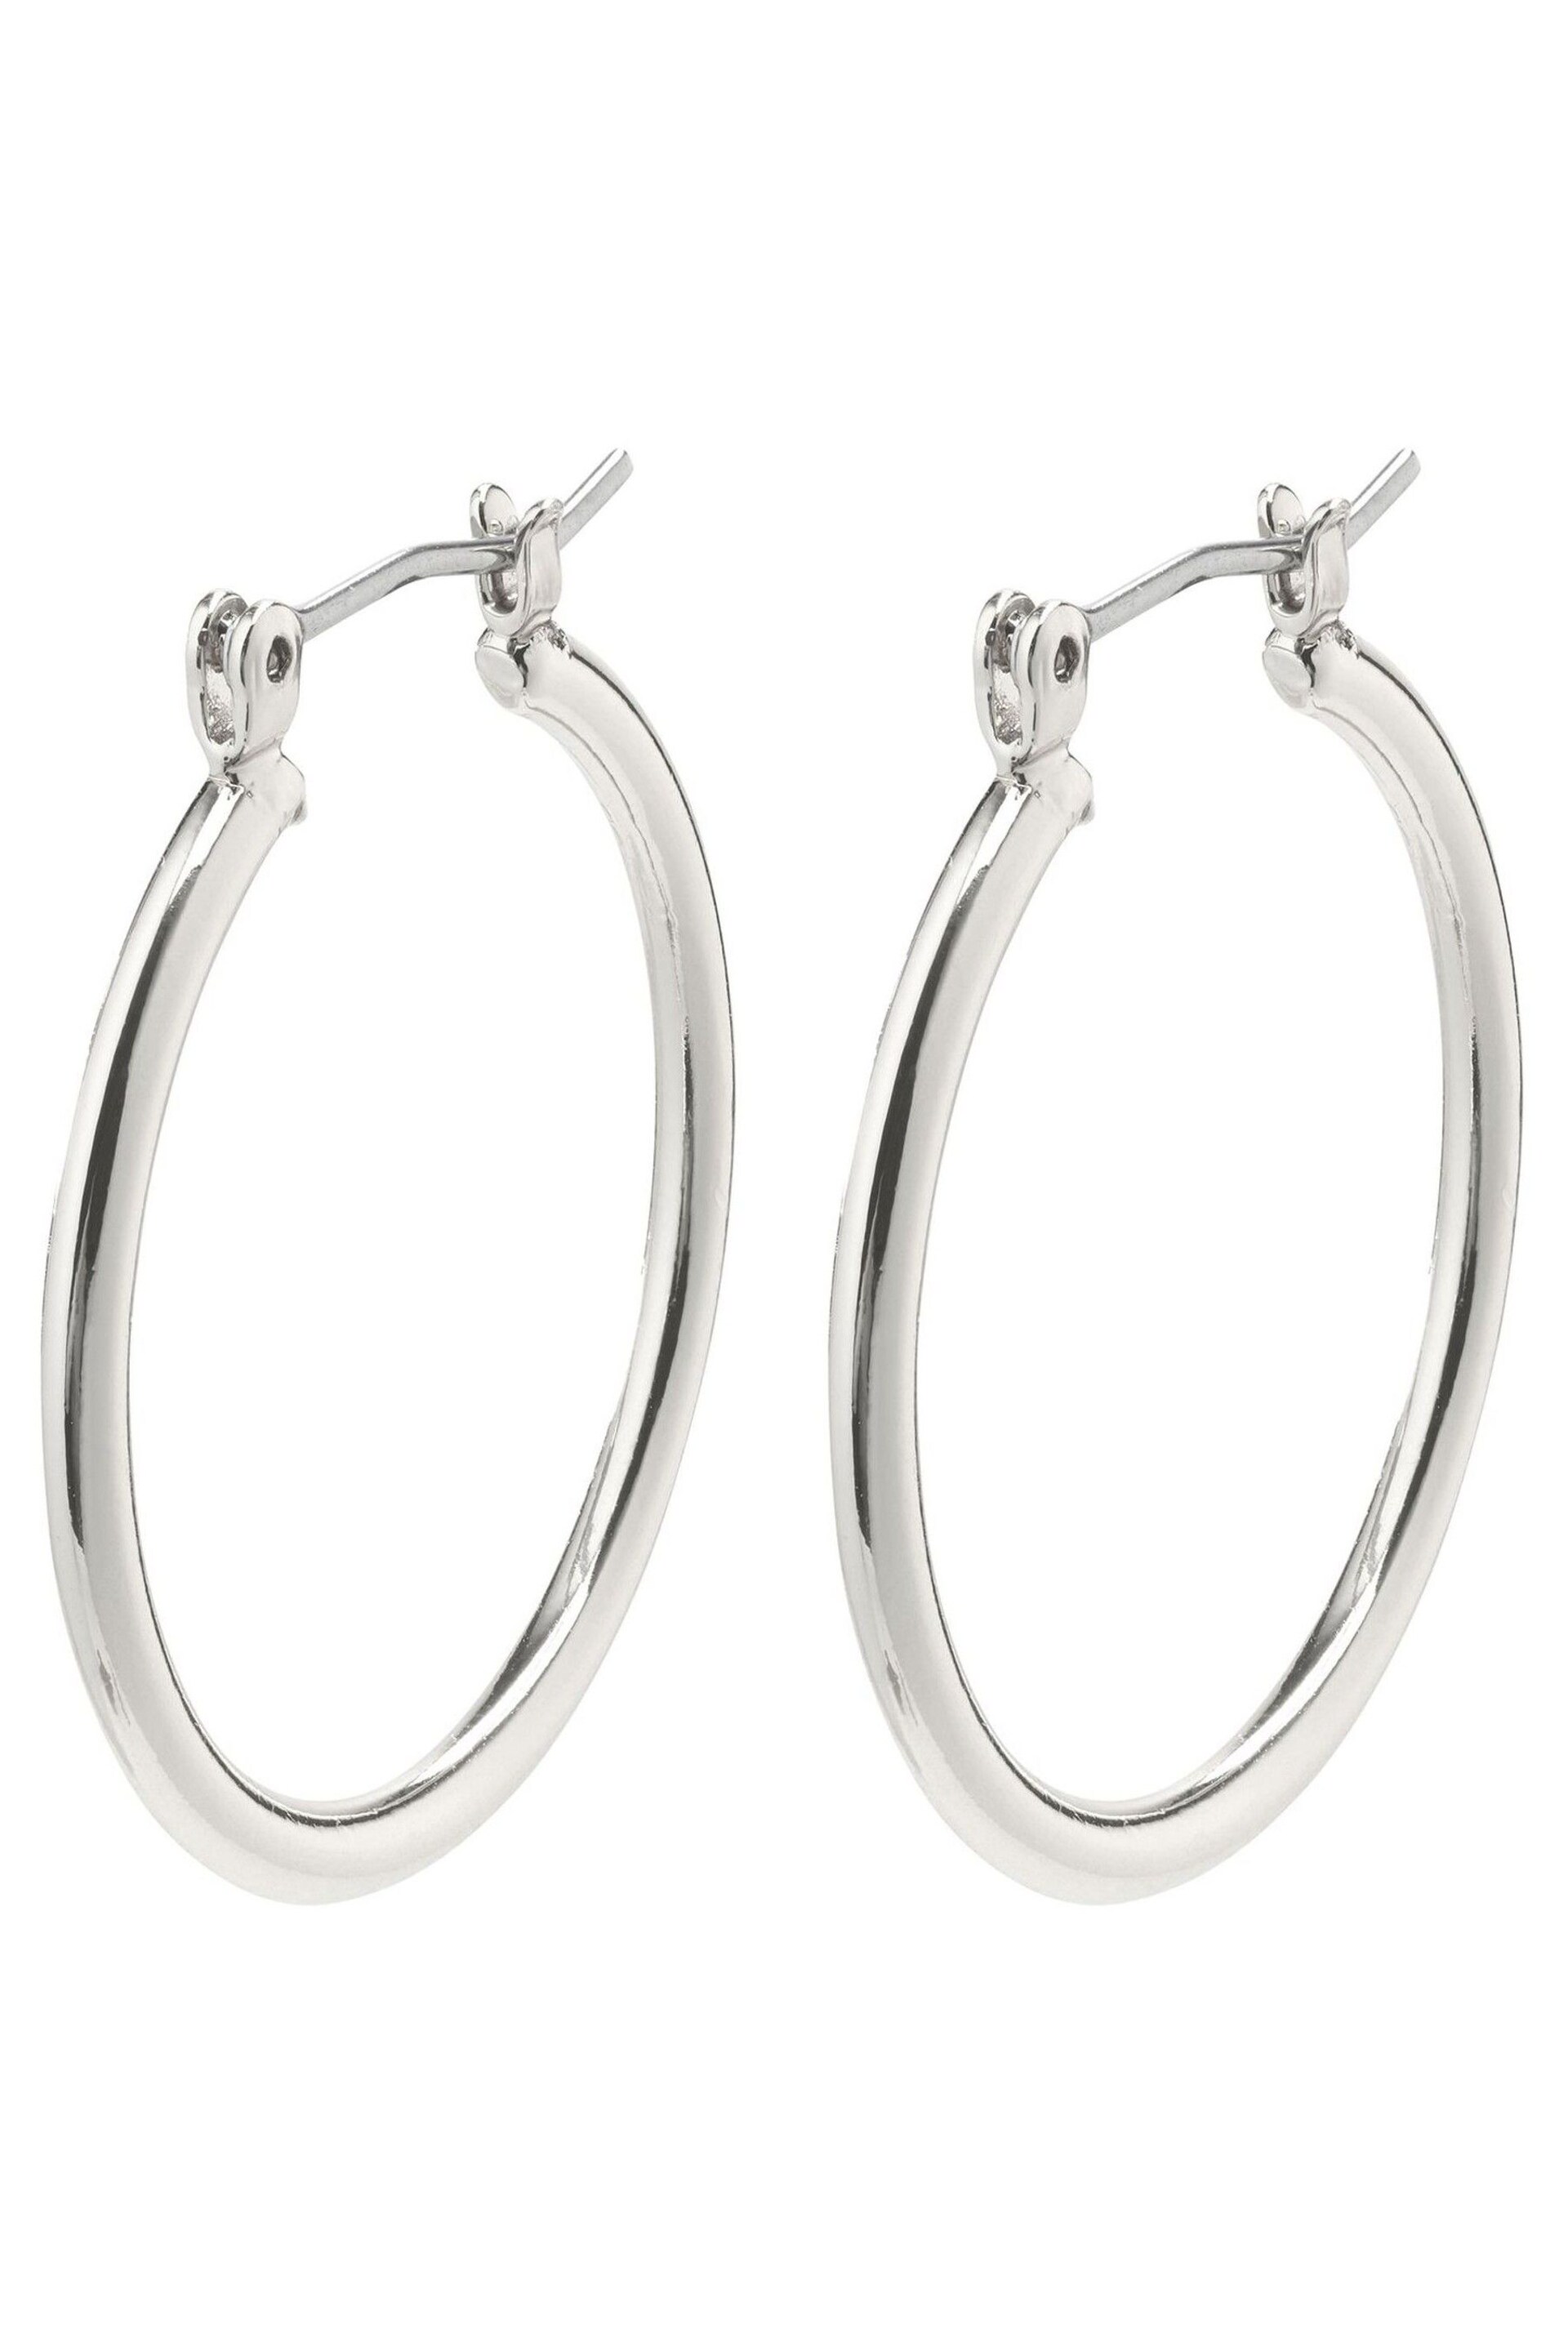 PILGRIM Silver Layla Creole Hoop Plated Earrings - Image 3 of 3